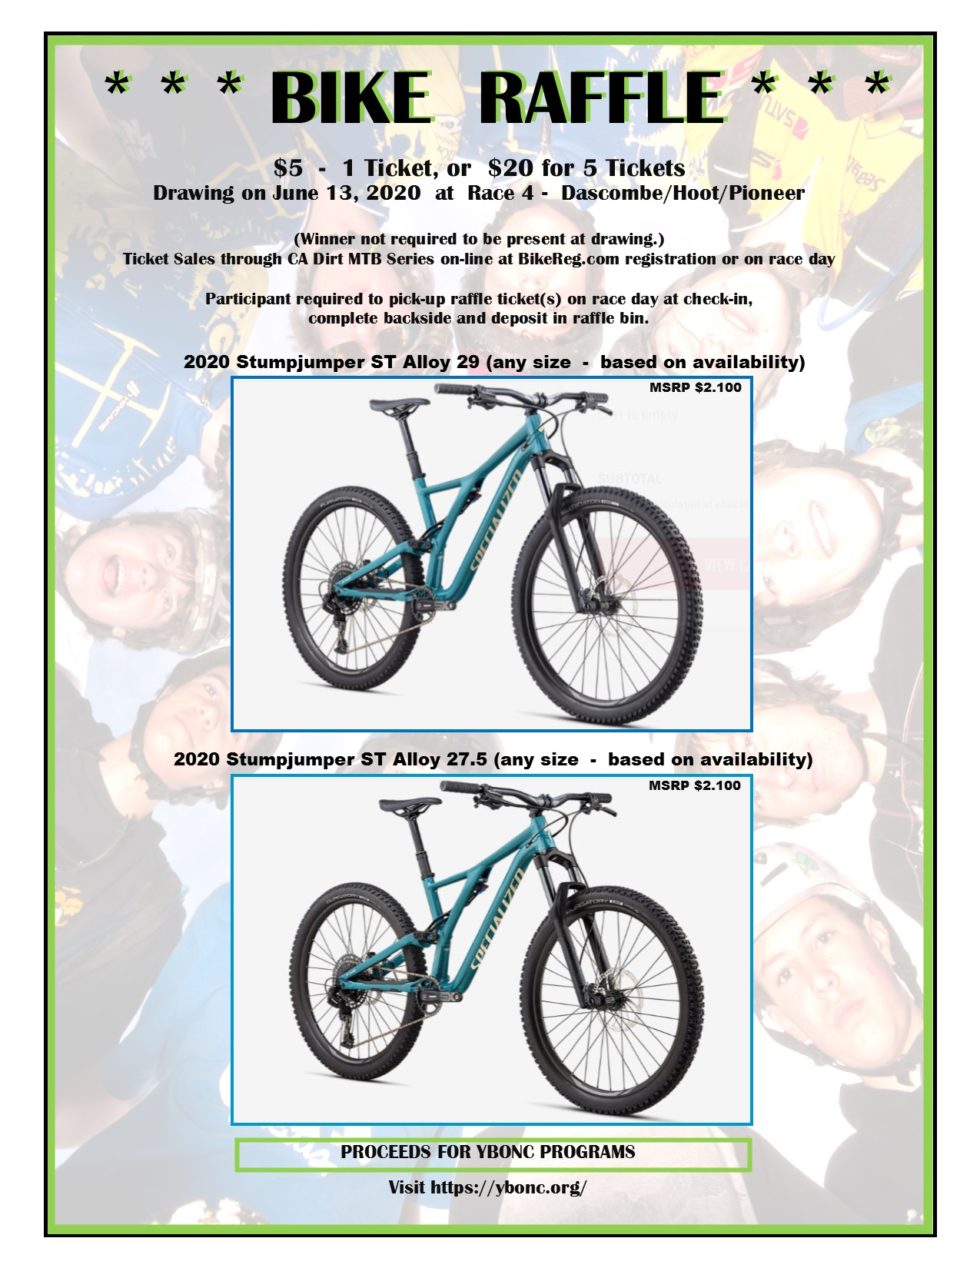 Bike Raffle & Fundraising YBONC